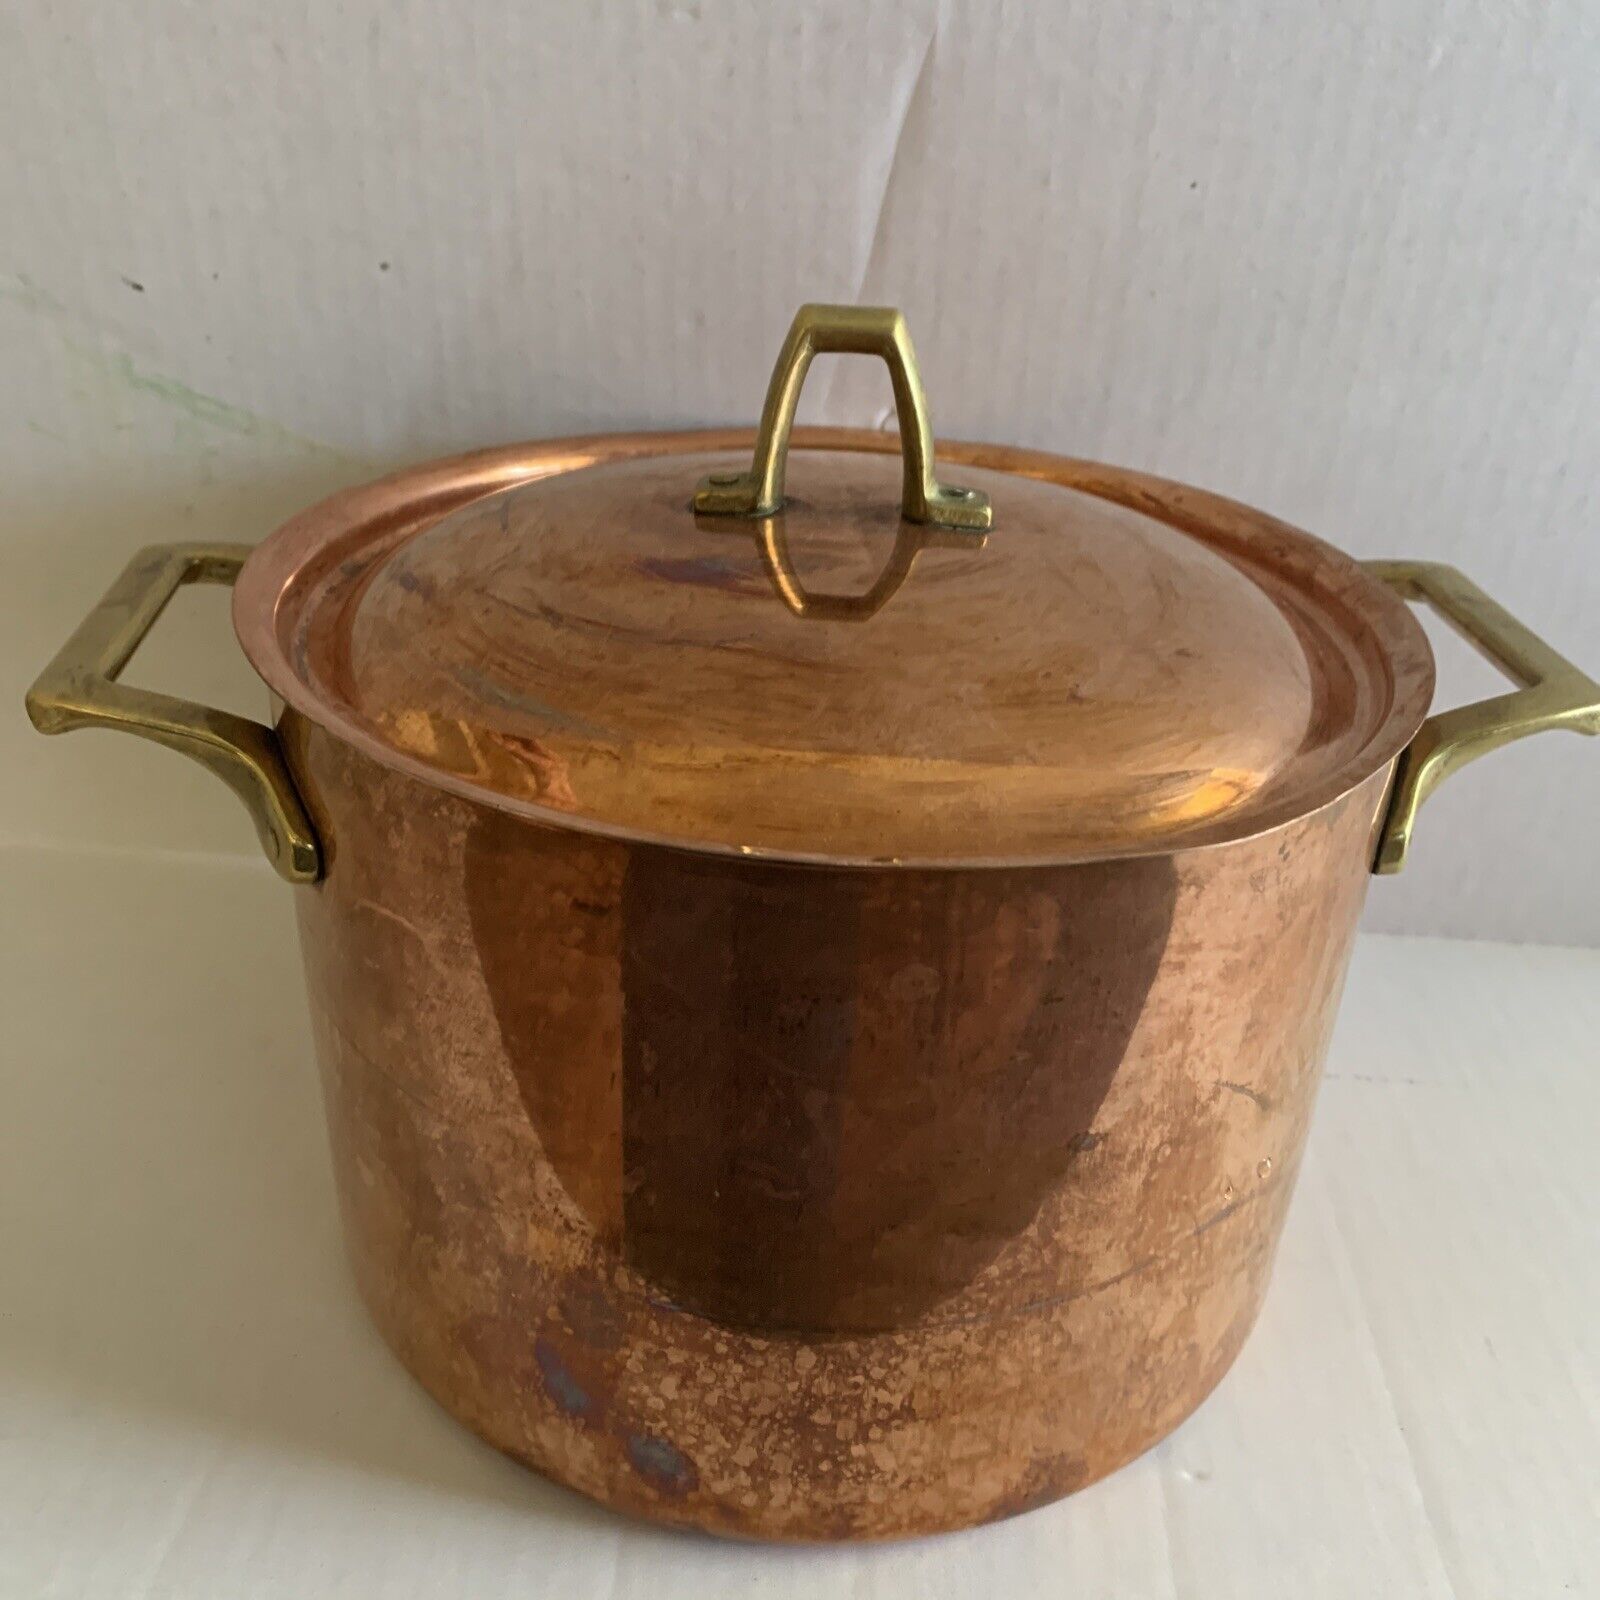 Paul Revere Limited Edition Copper Stock Pot w/ Lid Brass Handles 3.5 Qt Rare